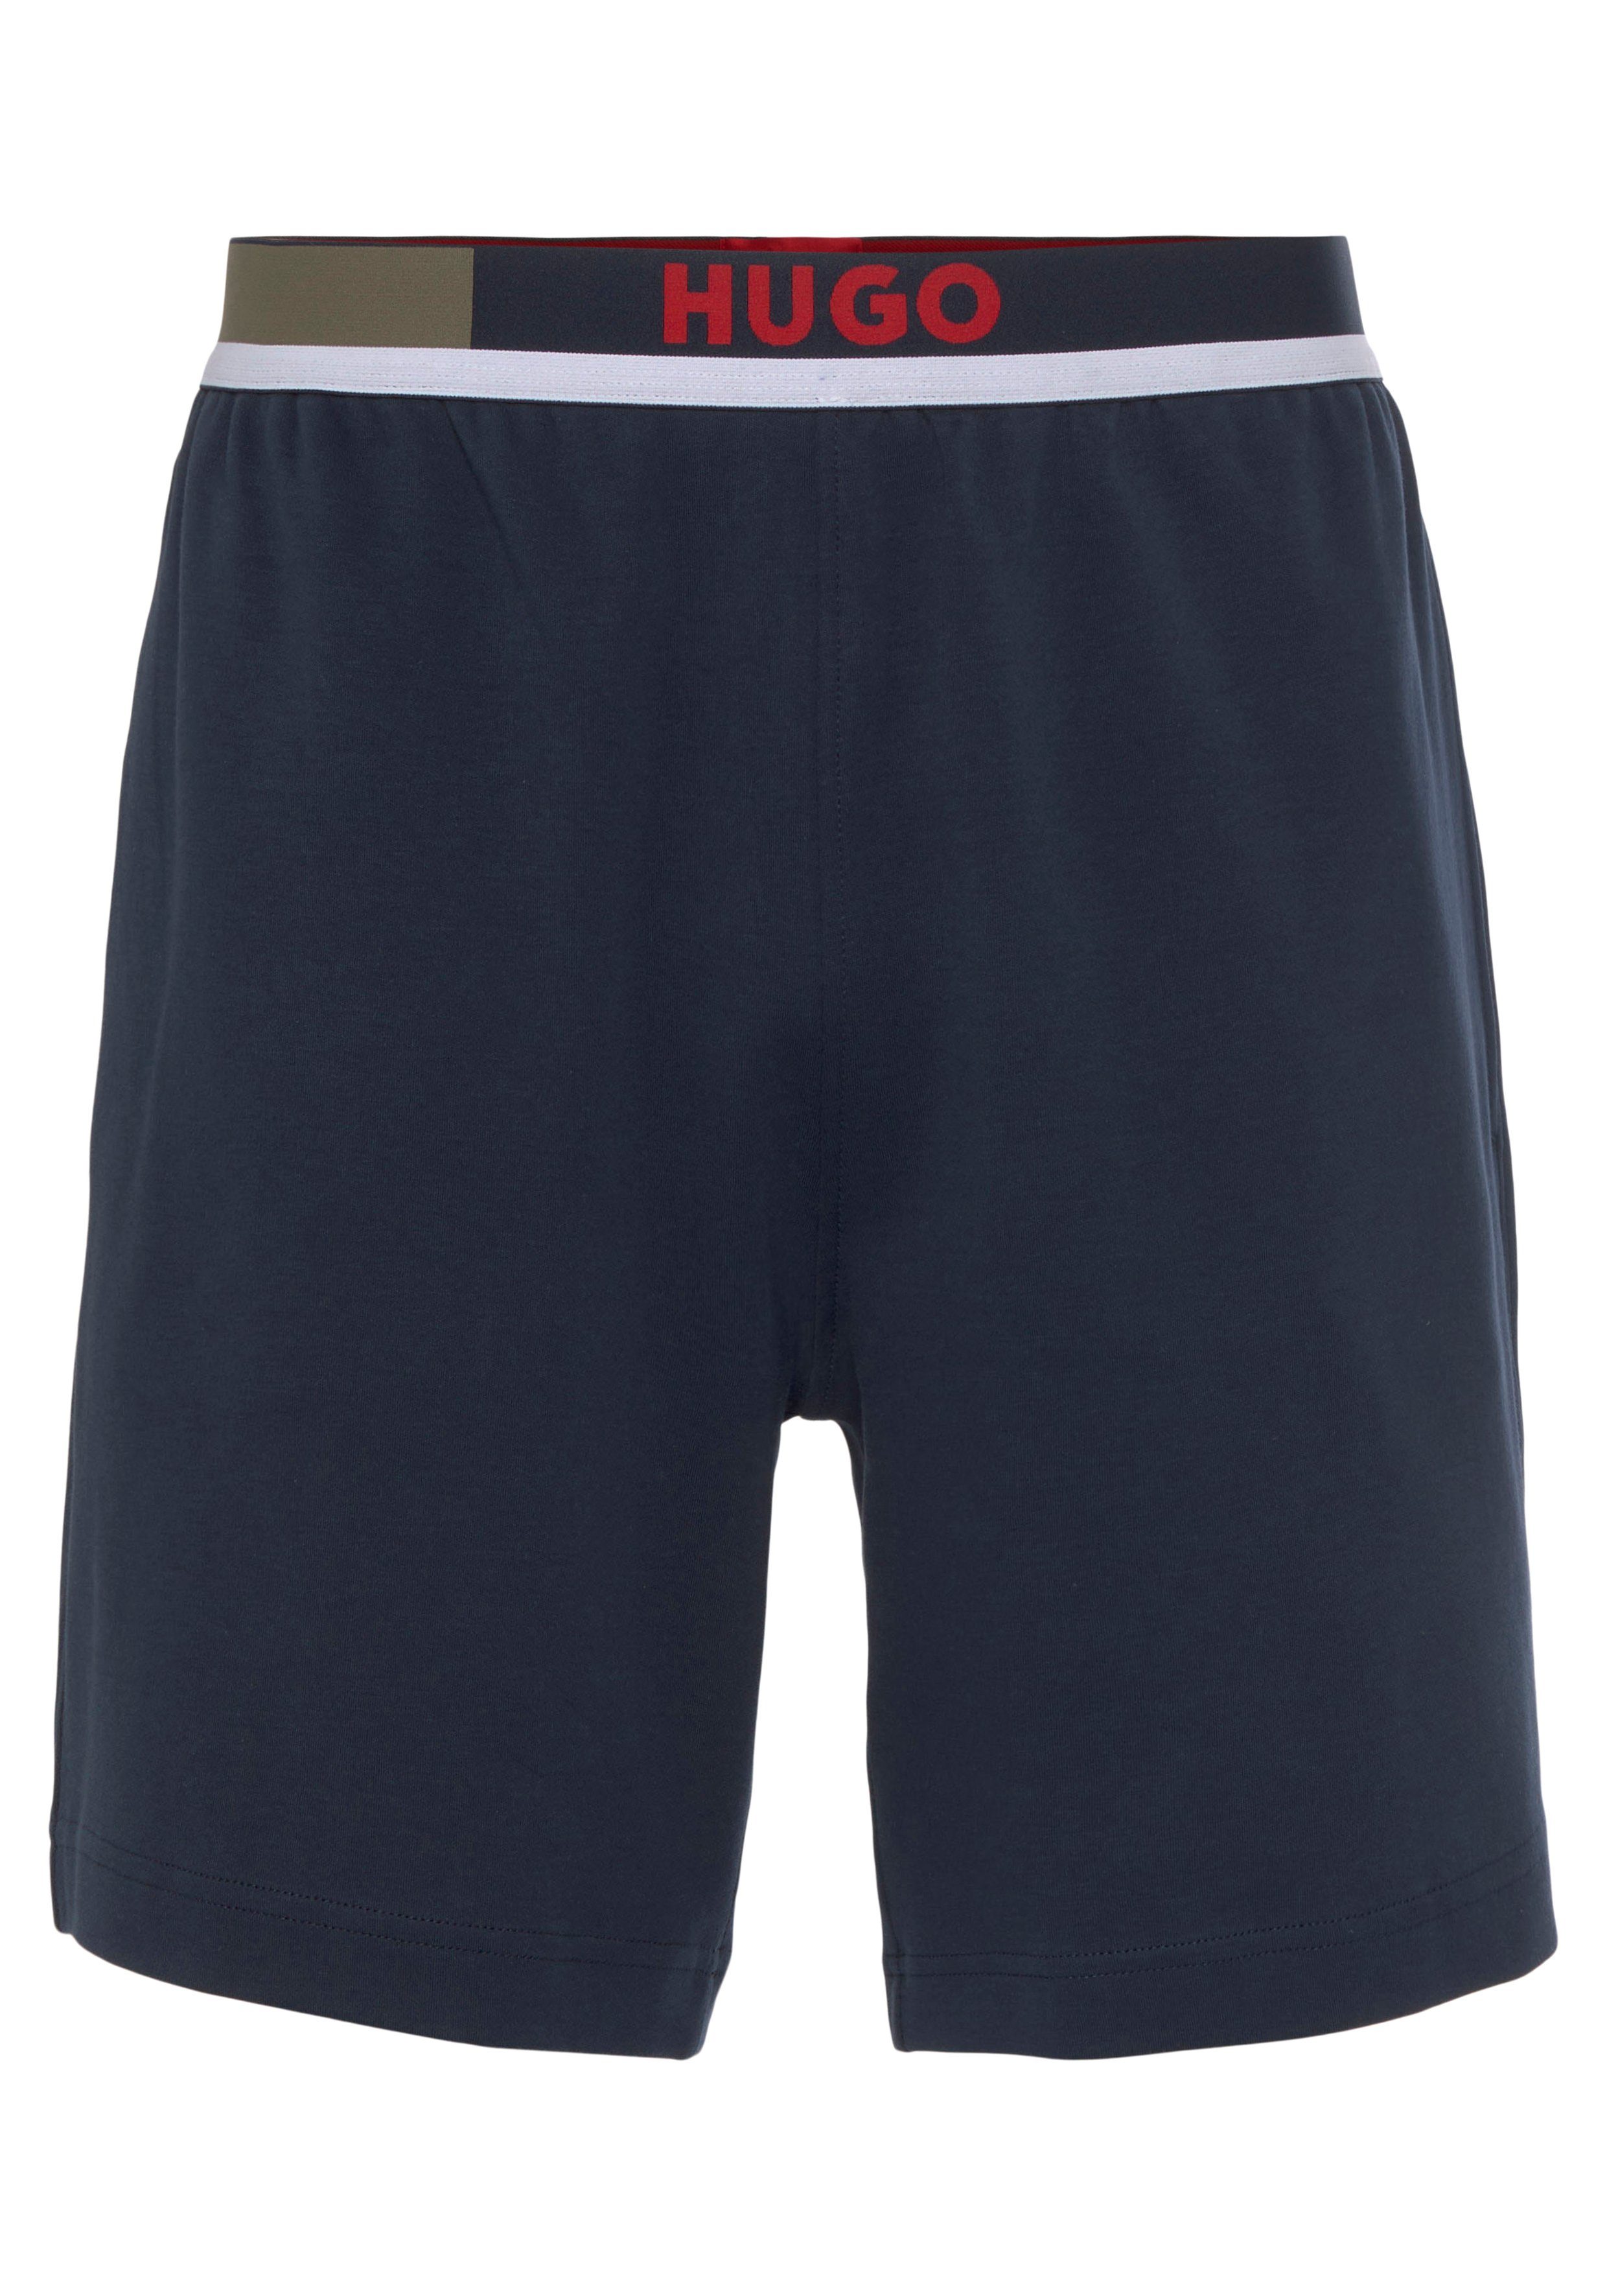 HUGO Pyjamashorts Shorts elastischem Bund Colorblock mit